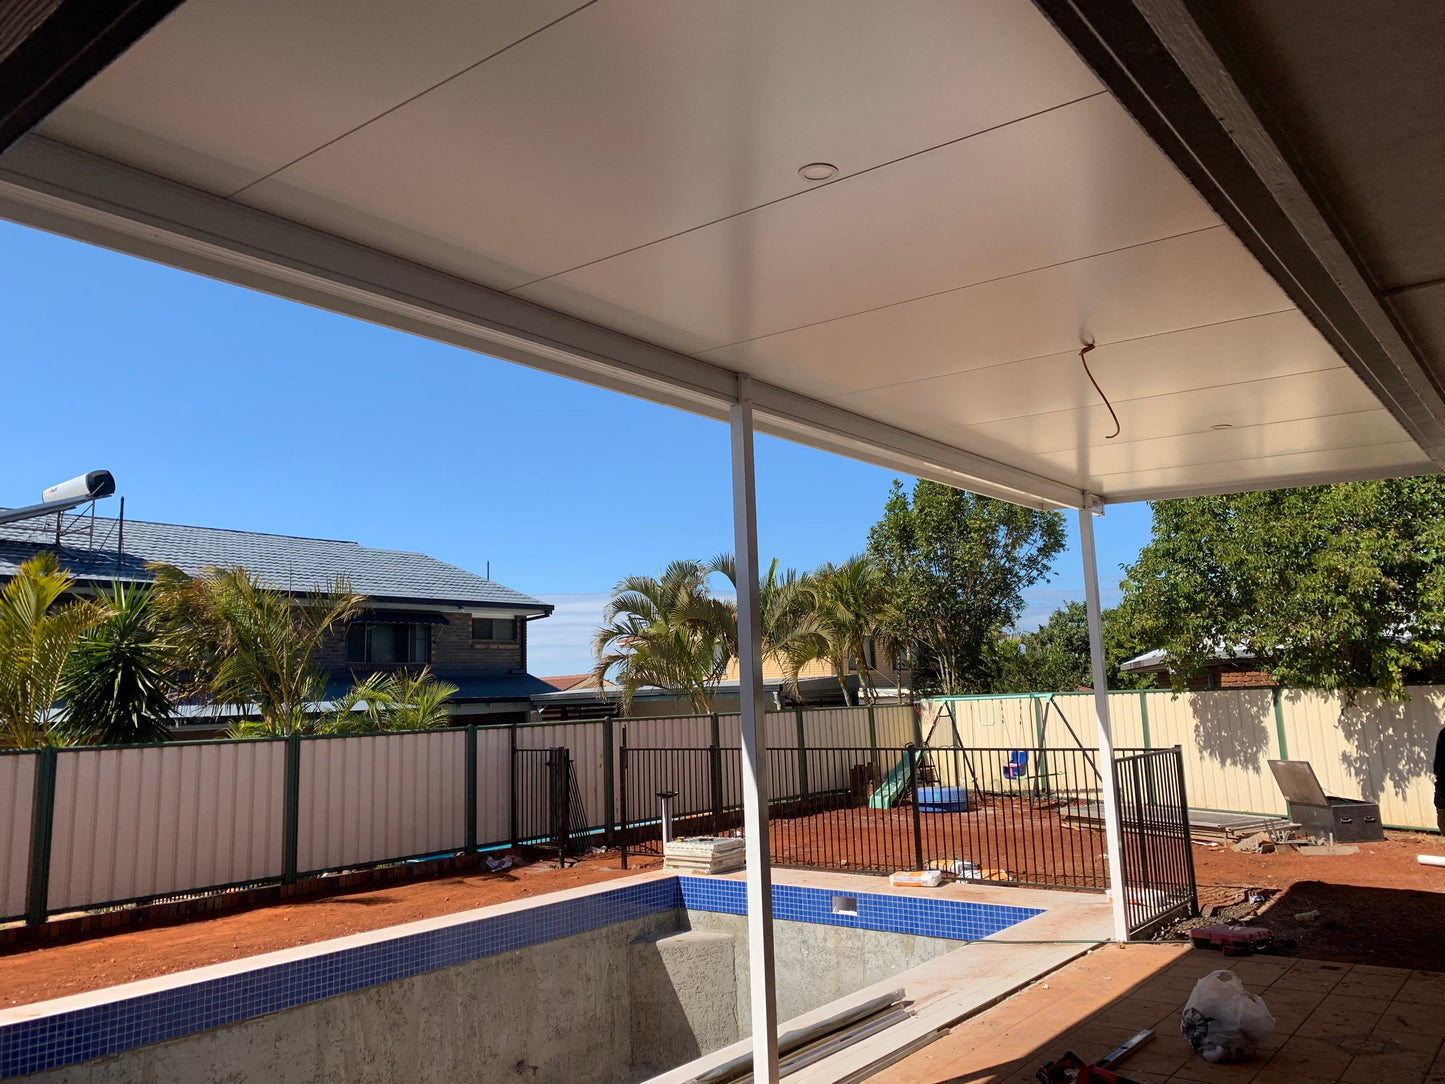 SmartKits Australia Insulated Flyover Roof- 6m (L) x 3m (W).